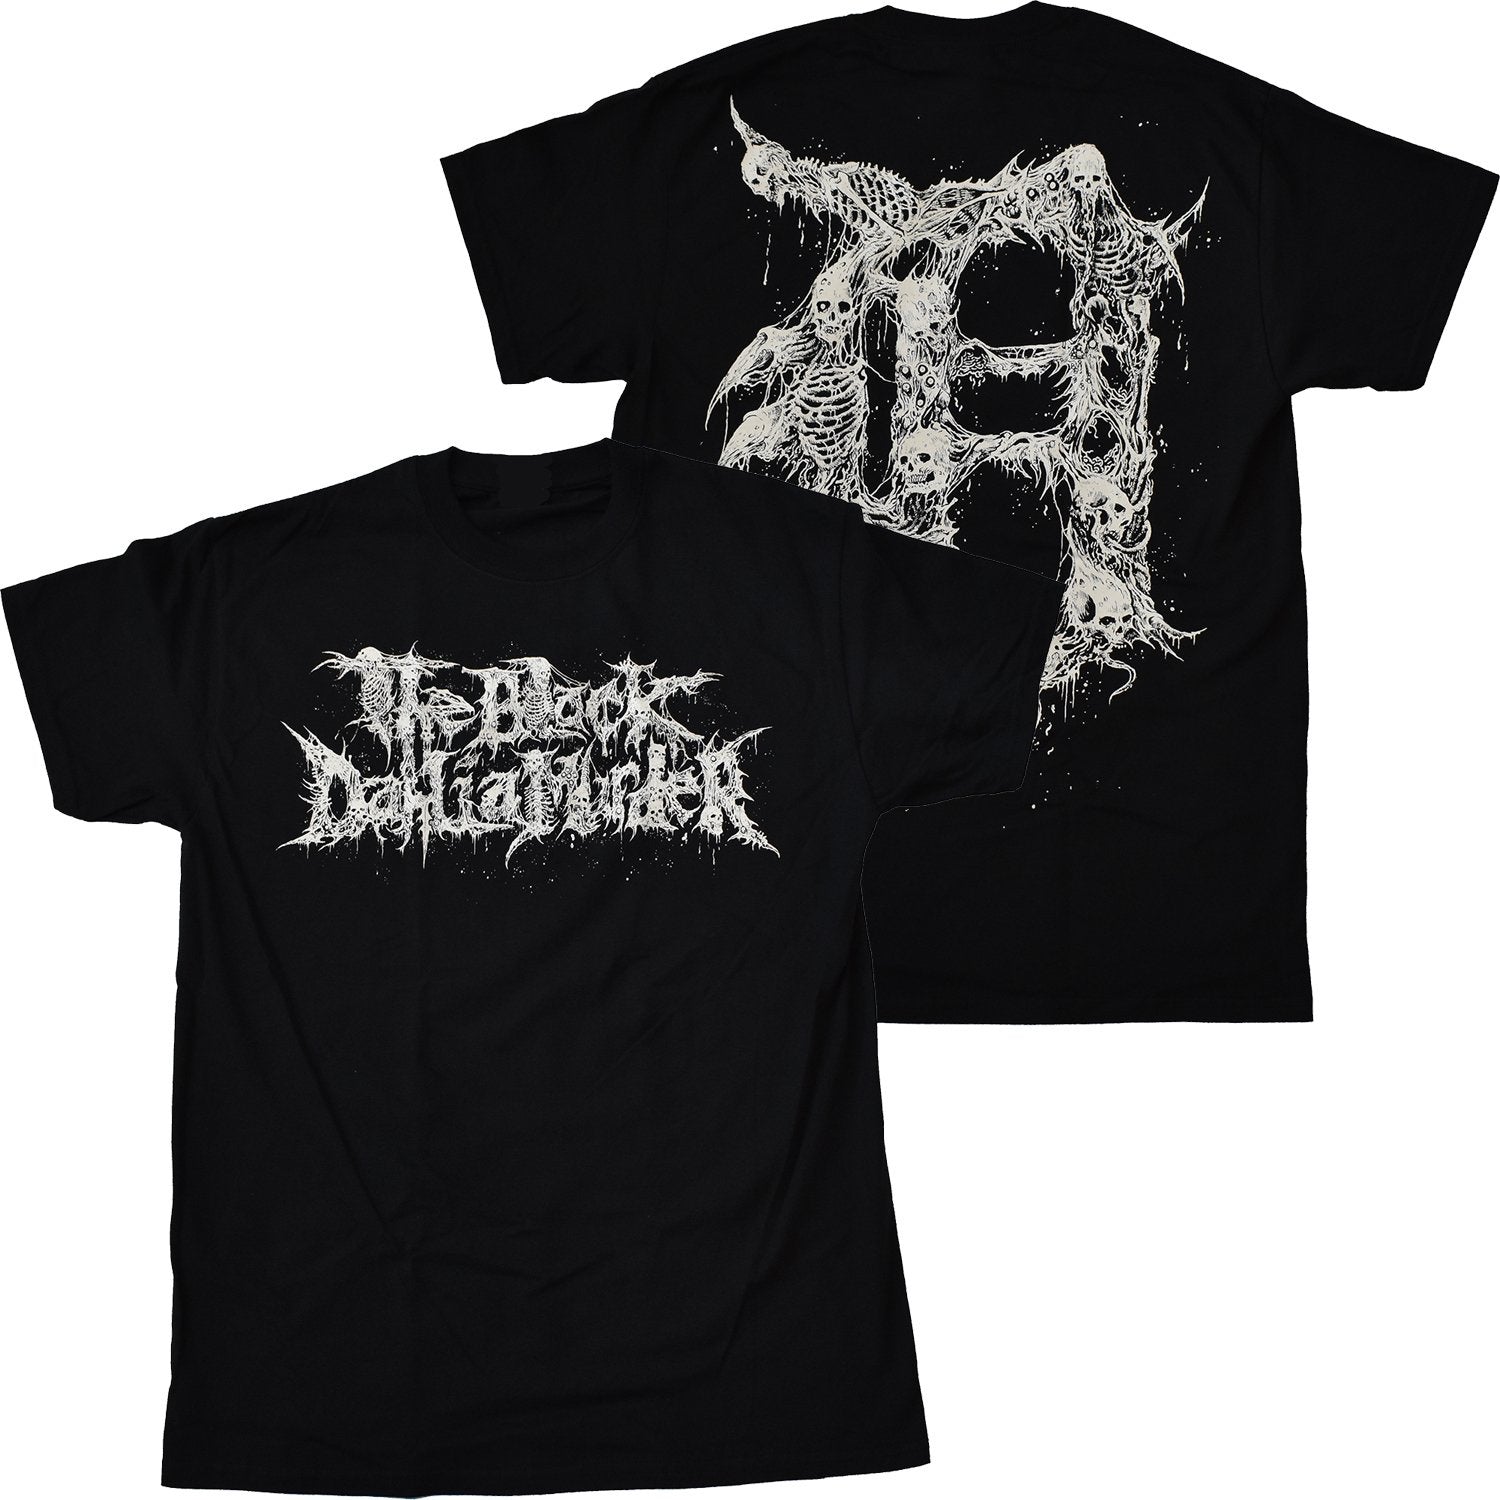 Black t-shirt with 'THE BLACK DAHLIA MURDER' band logo from Detroit concert merchandise